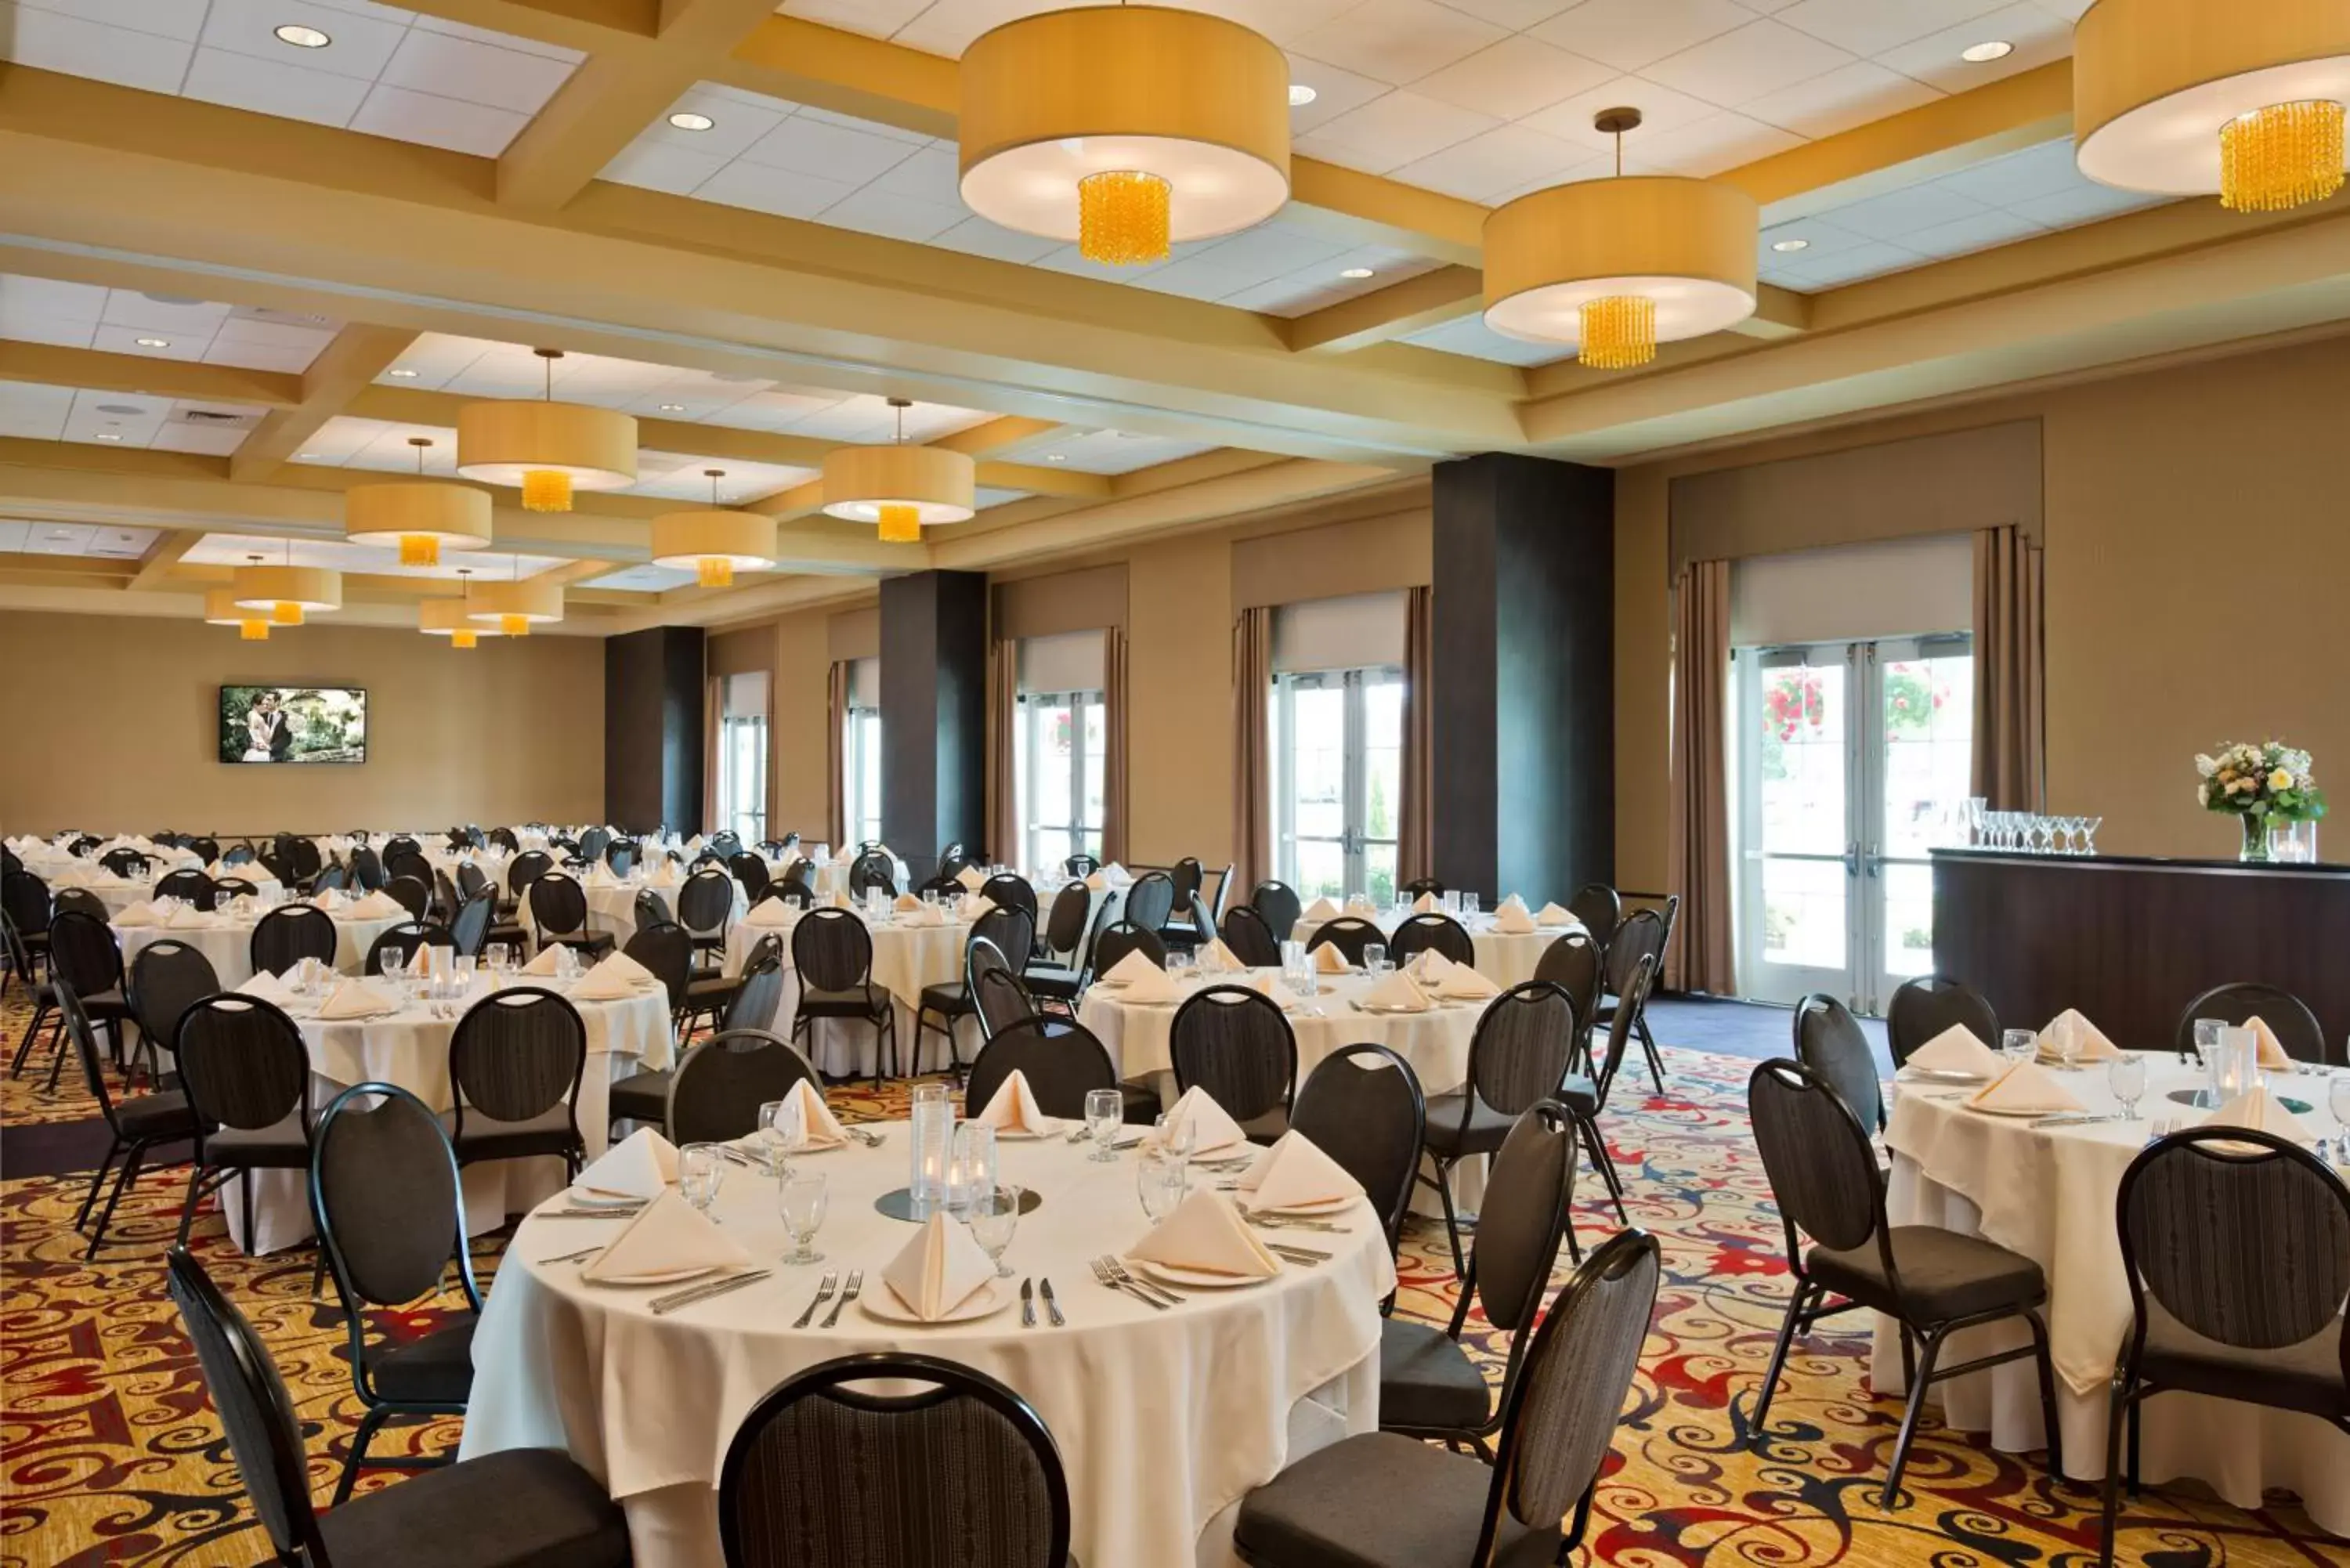 Banquet/Function facilities, Banquet Facilities in Saratoga Casino Hotel